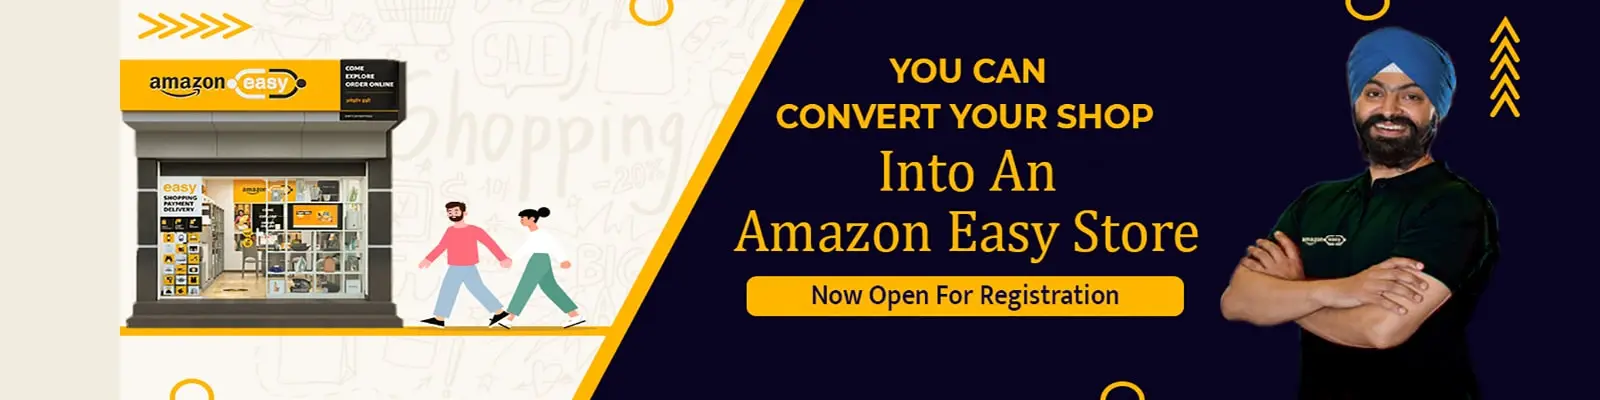 Amazon Easy Store Franchise Business